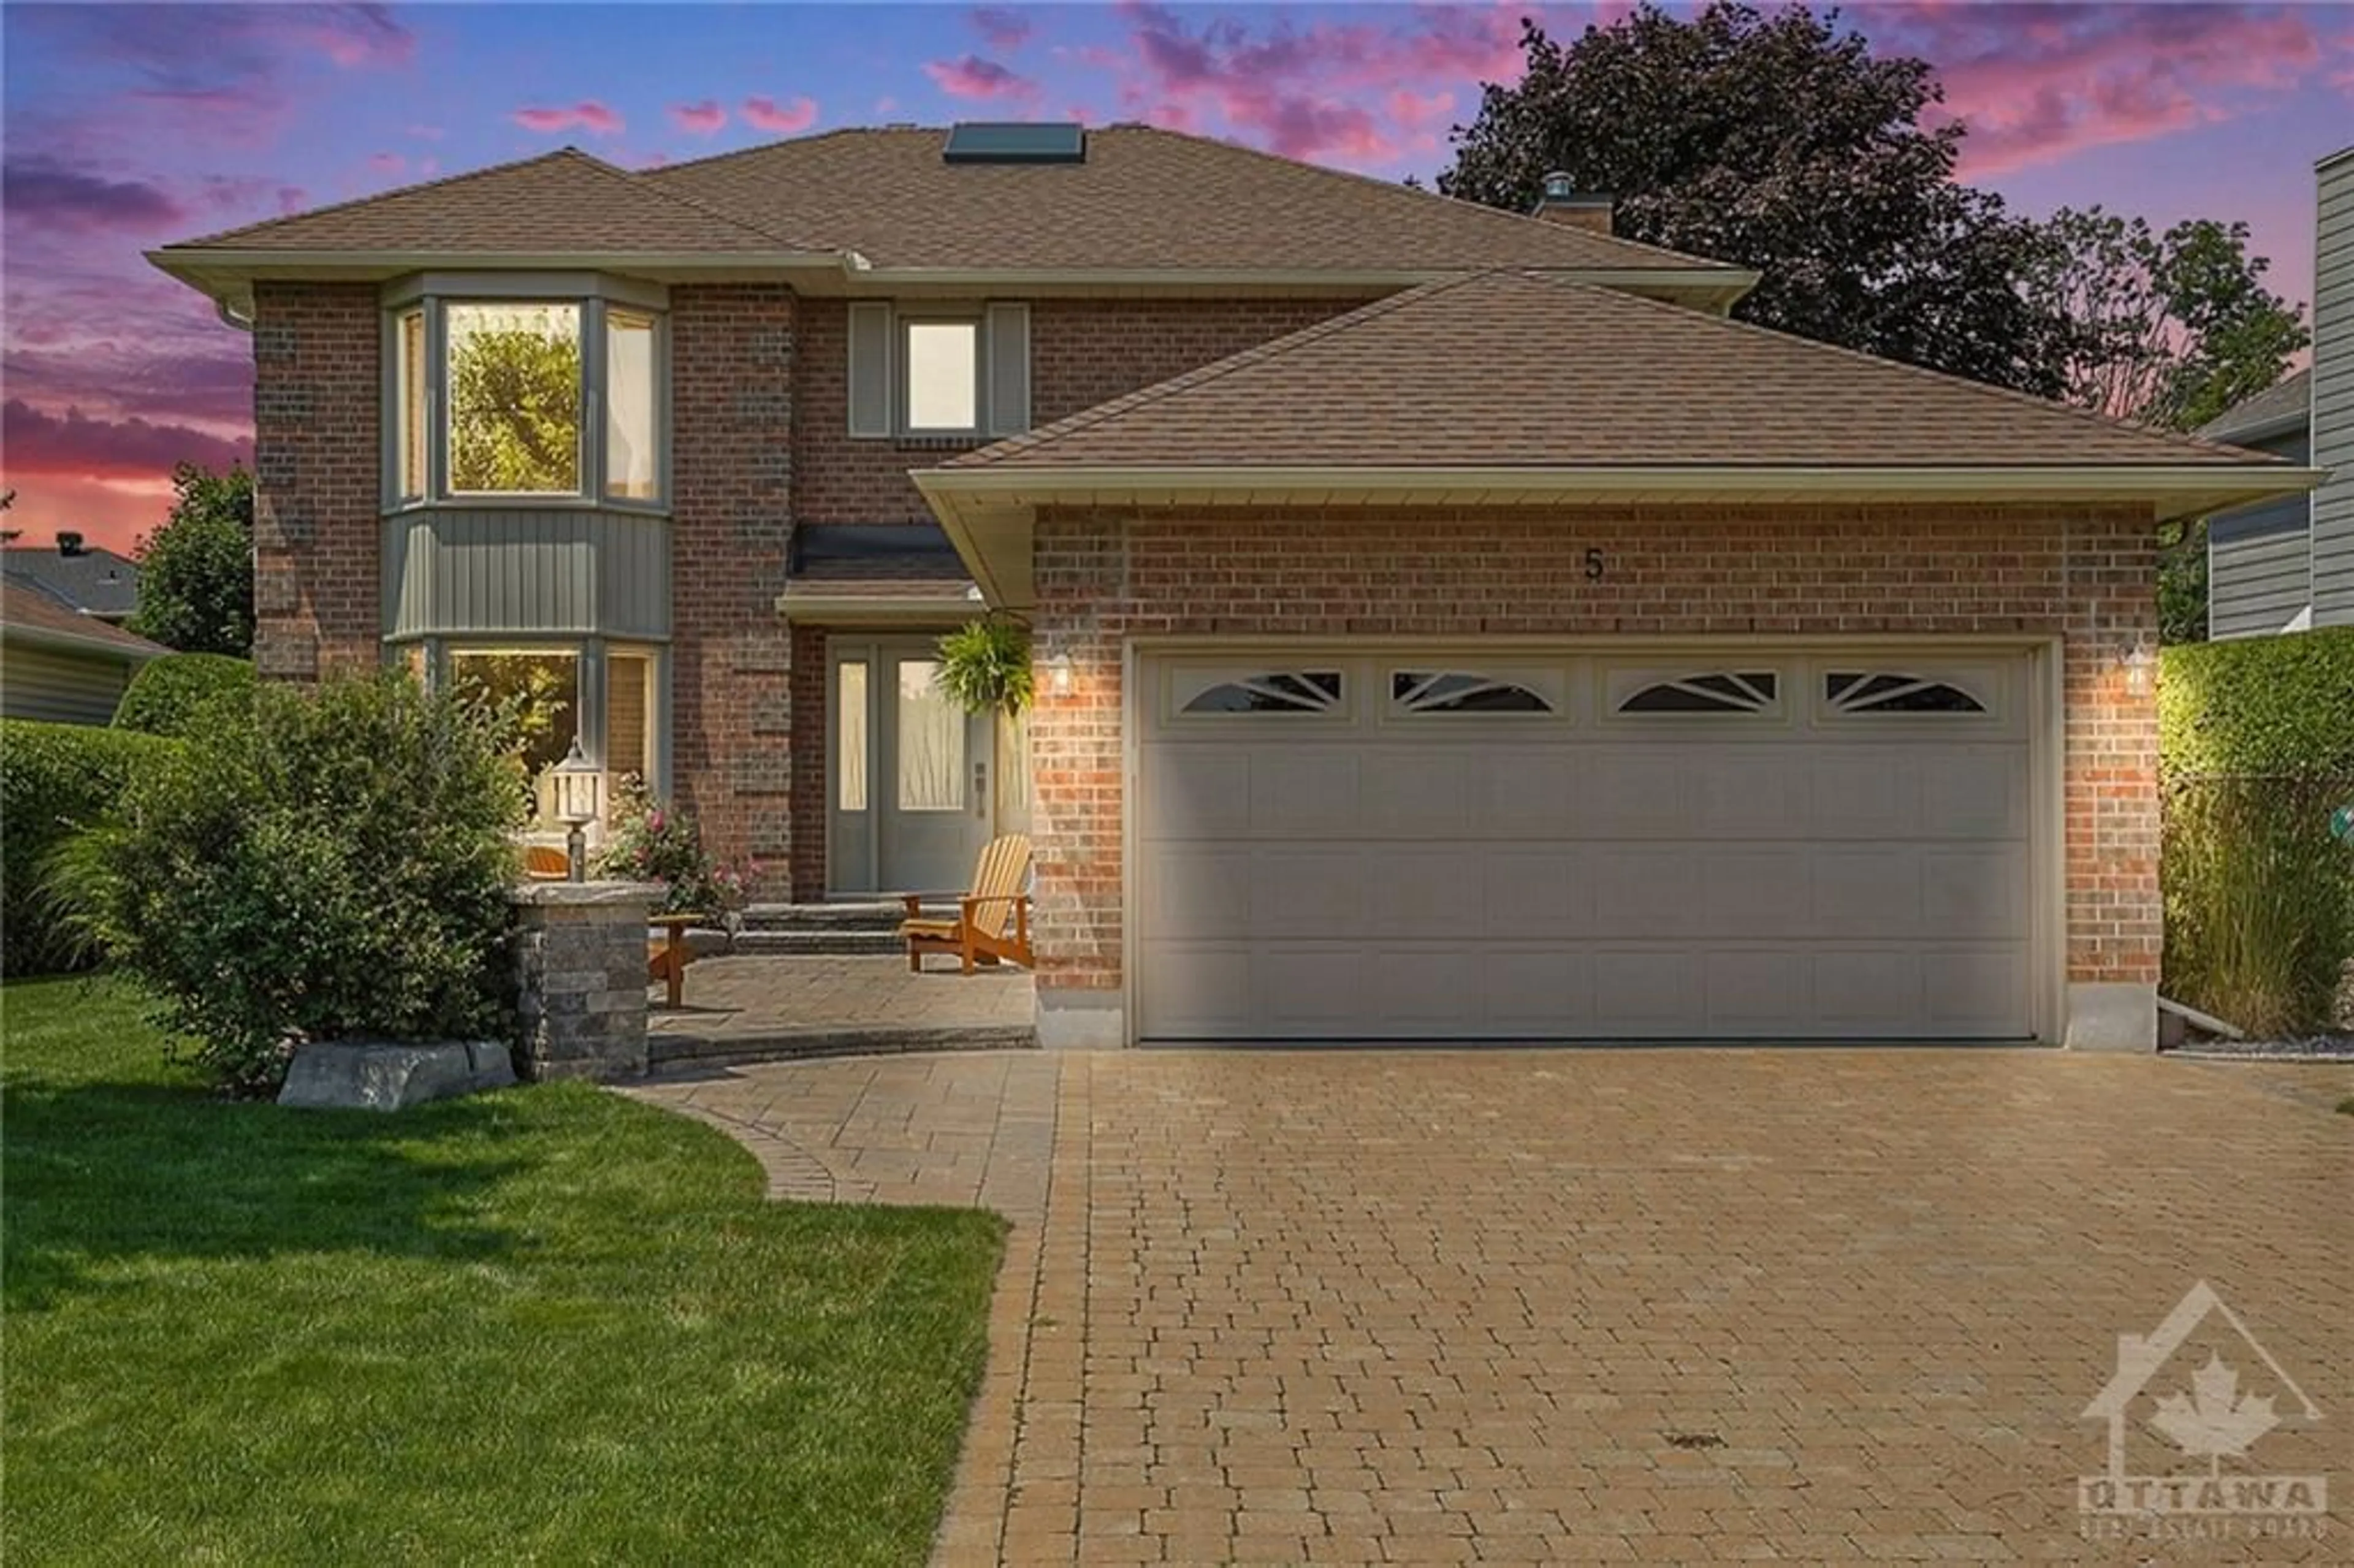 Home with brick exterior material for 5 SPRINGWOOD Cir, Ottawa Ontario K2S 1E1